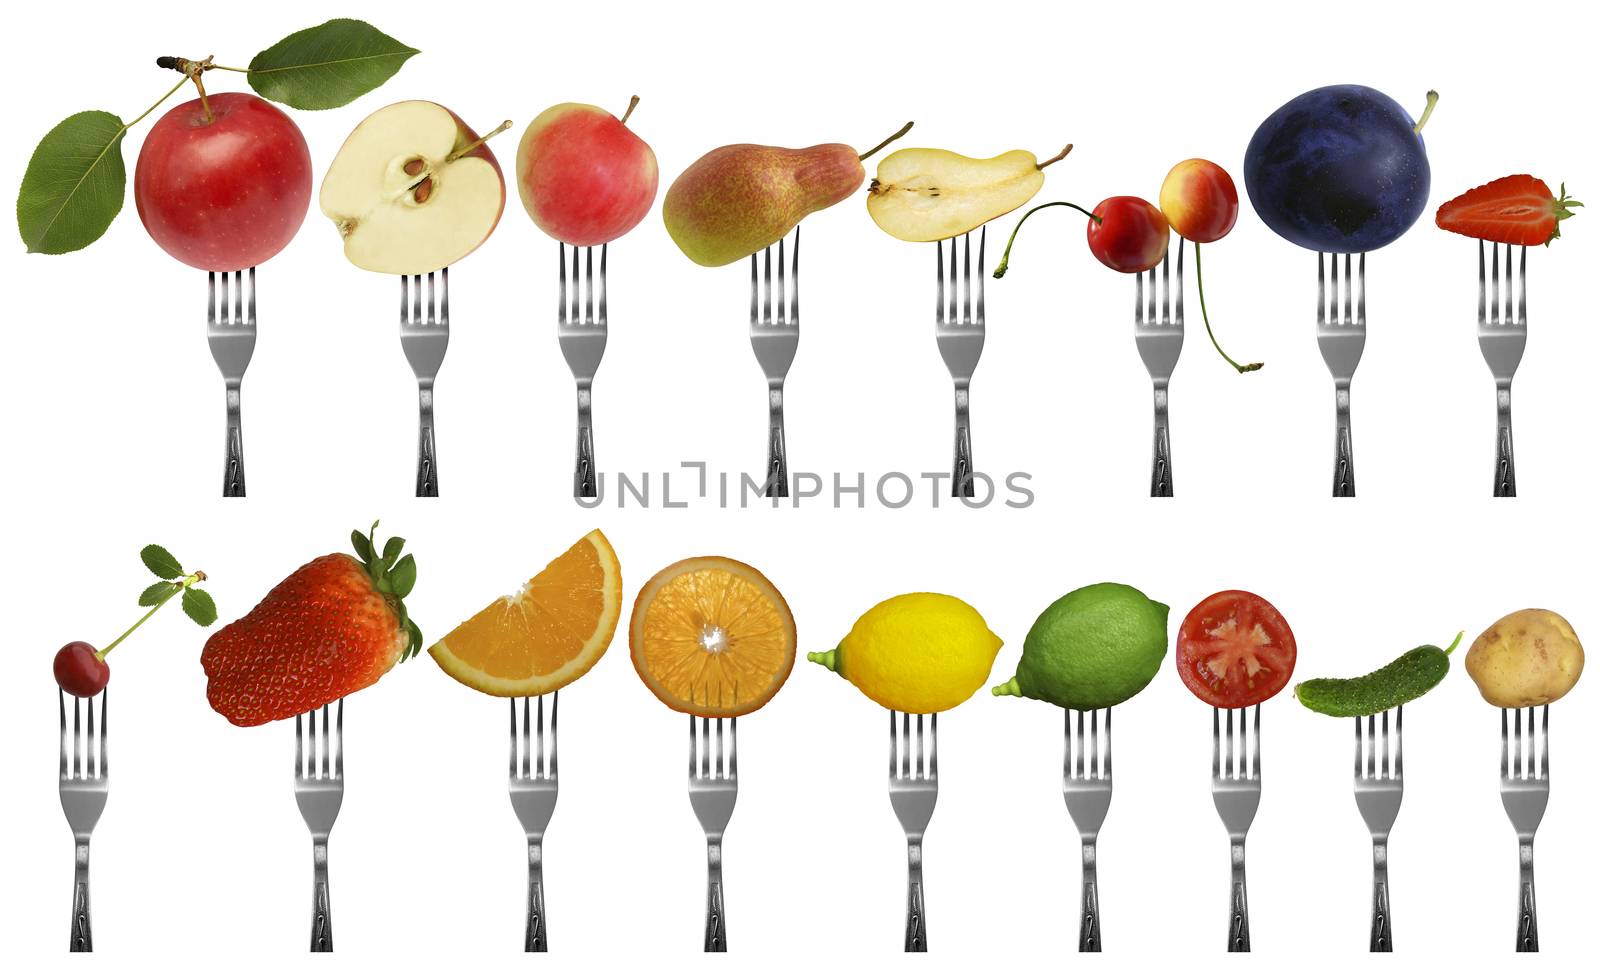 Fruits and vegetables by Venakr